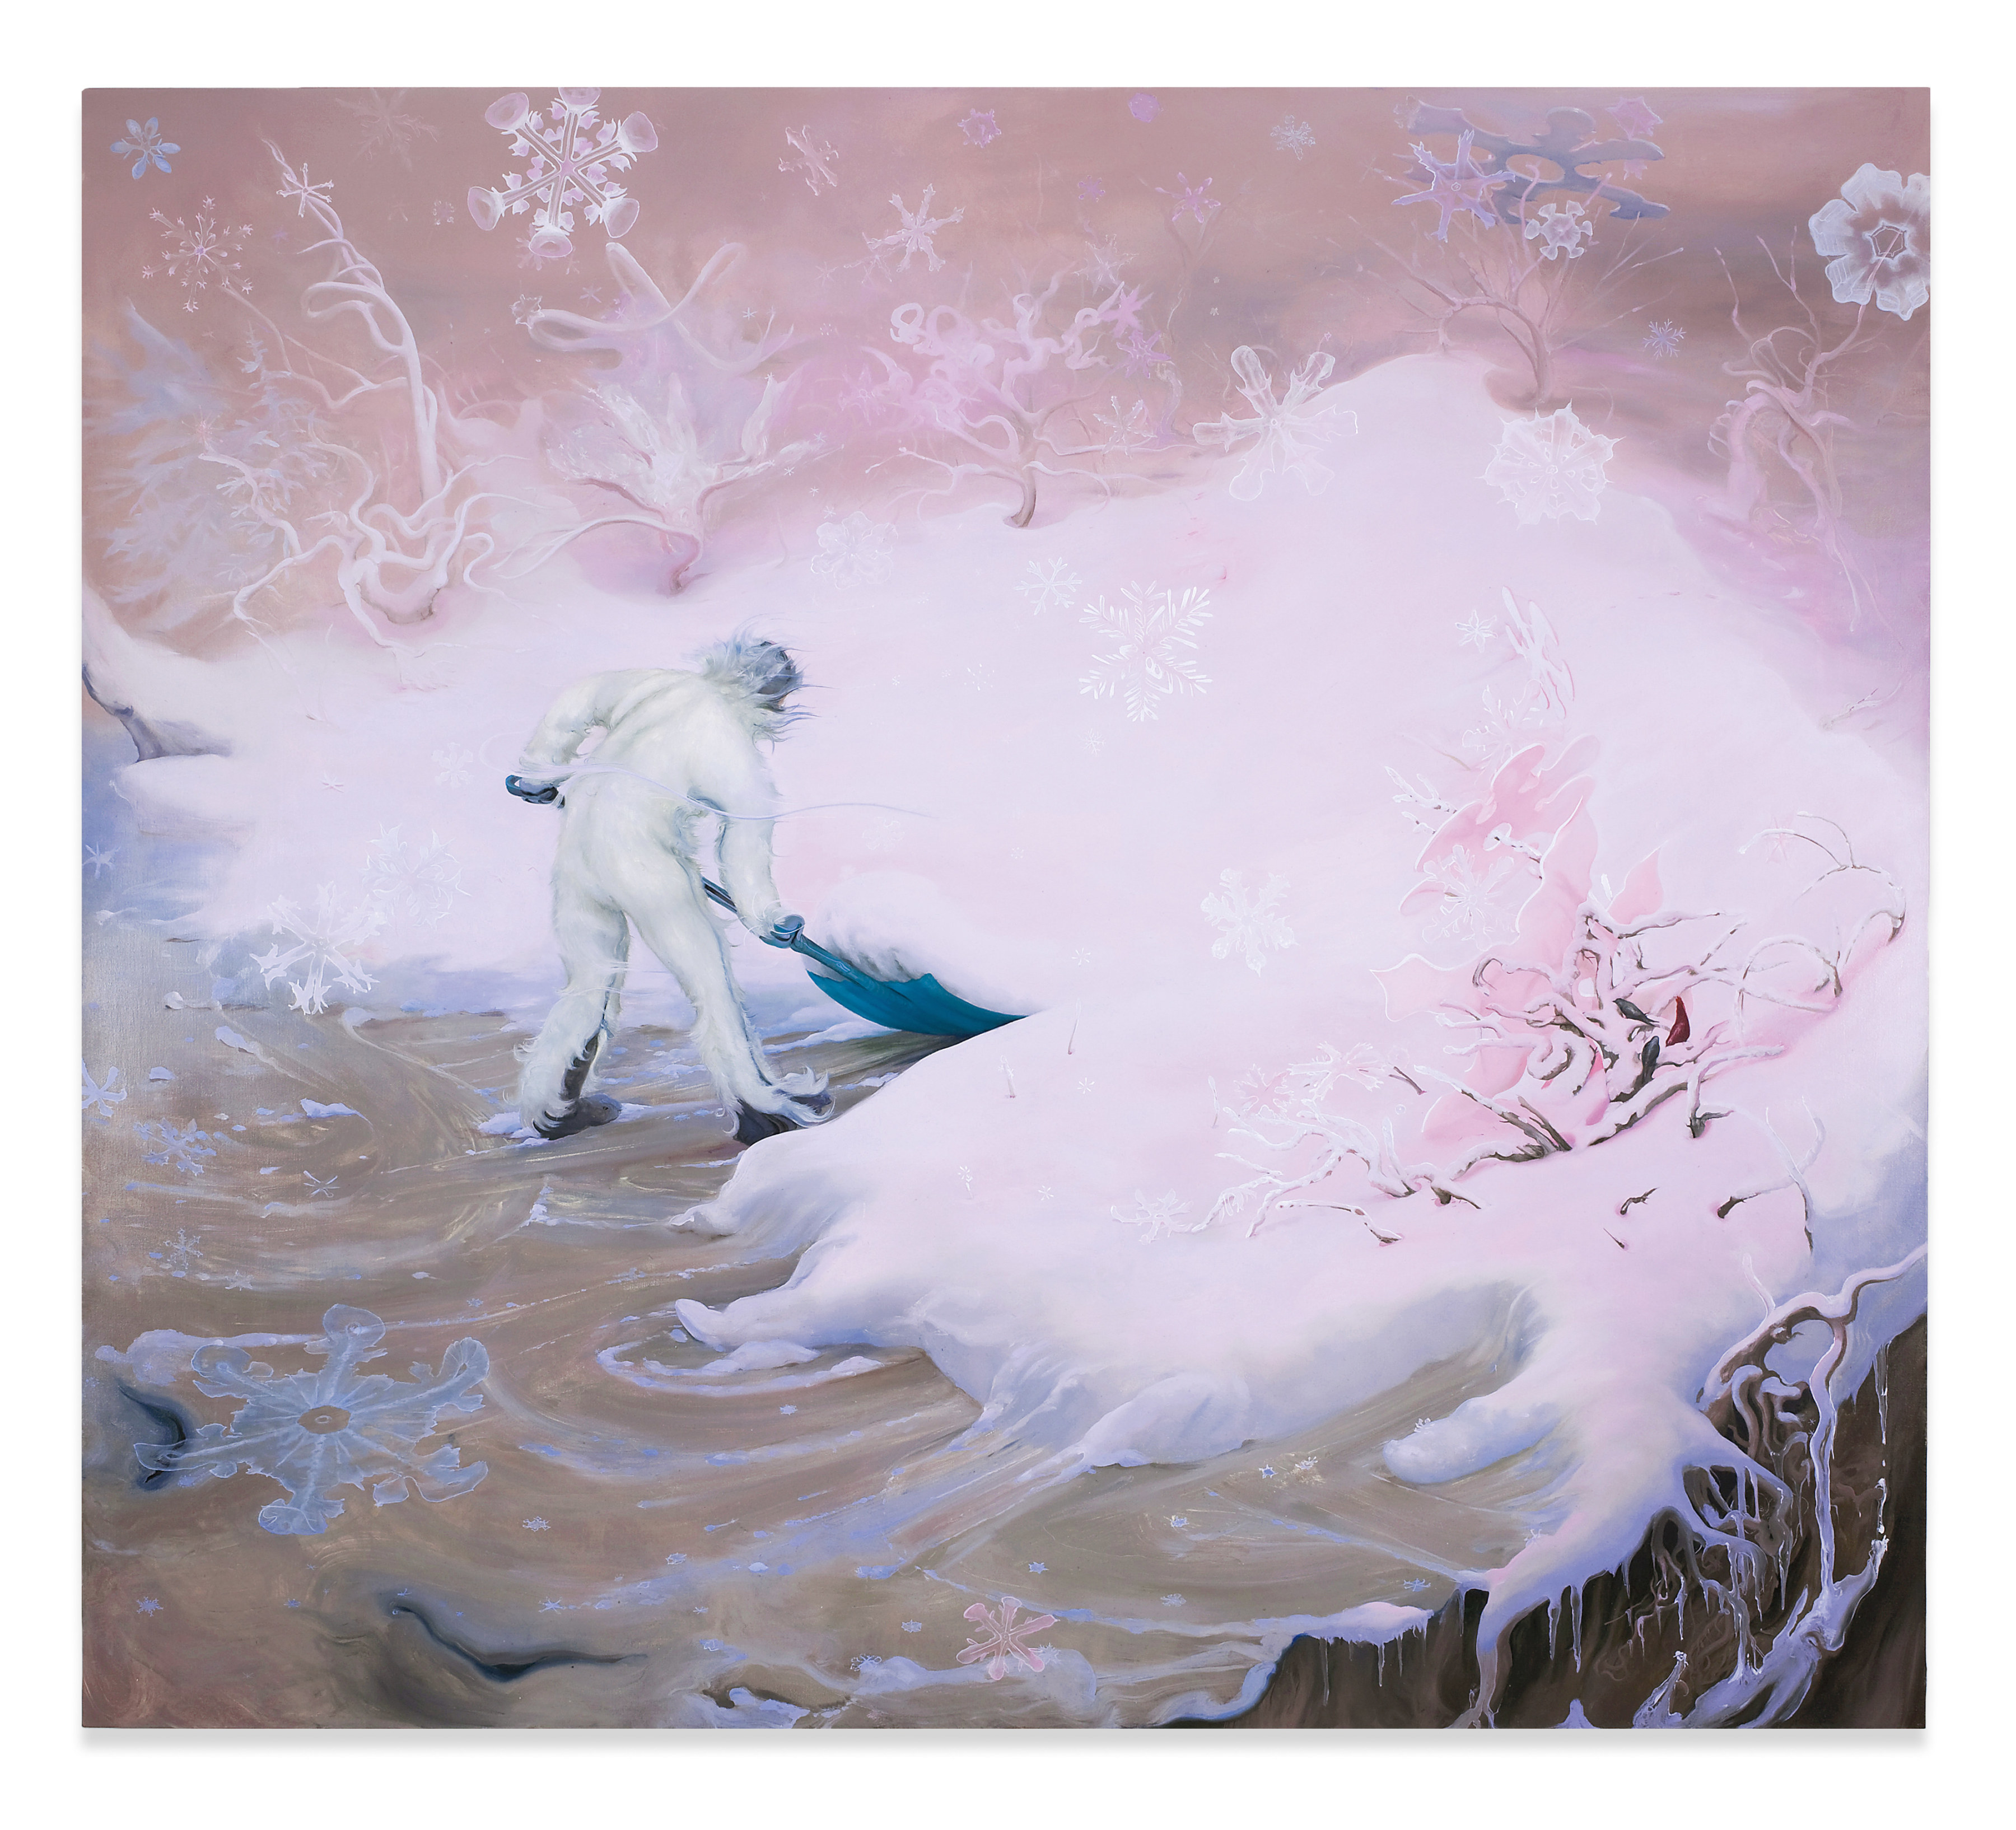 Inka Essenhigh, Snowflake (Pink), 2009, Oil on canvas